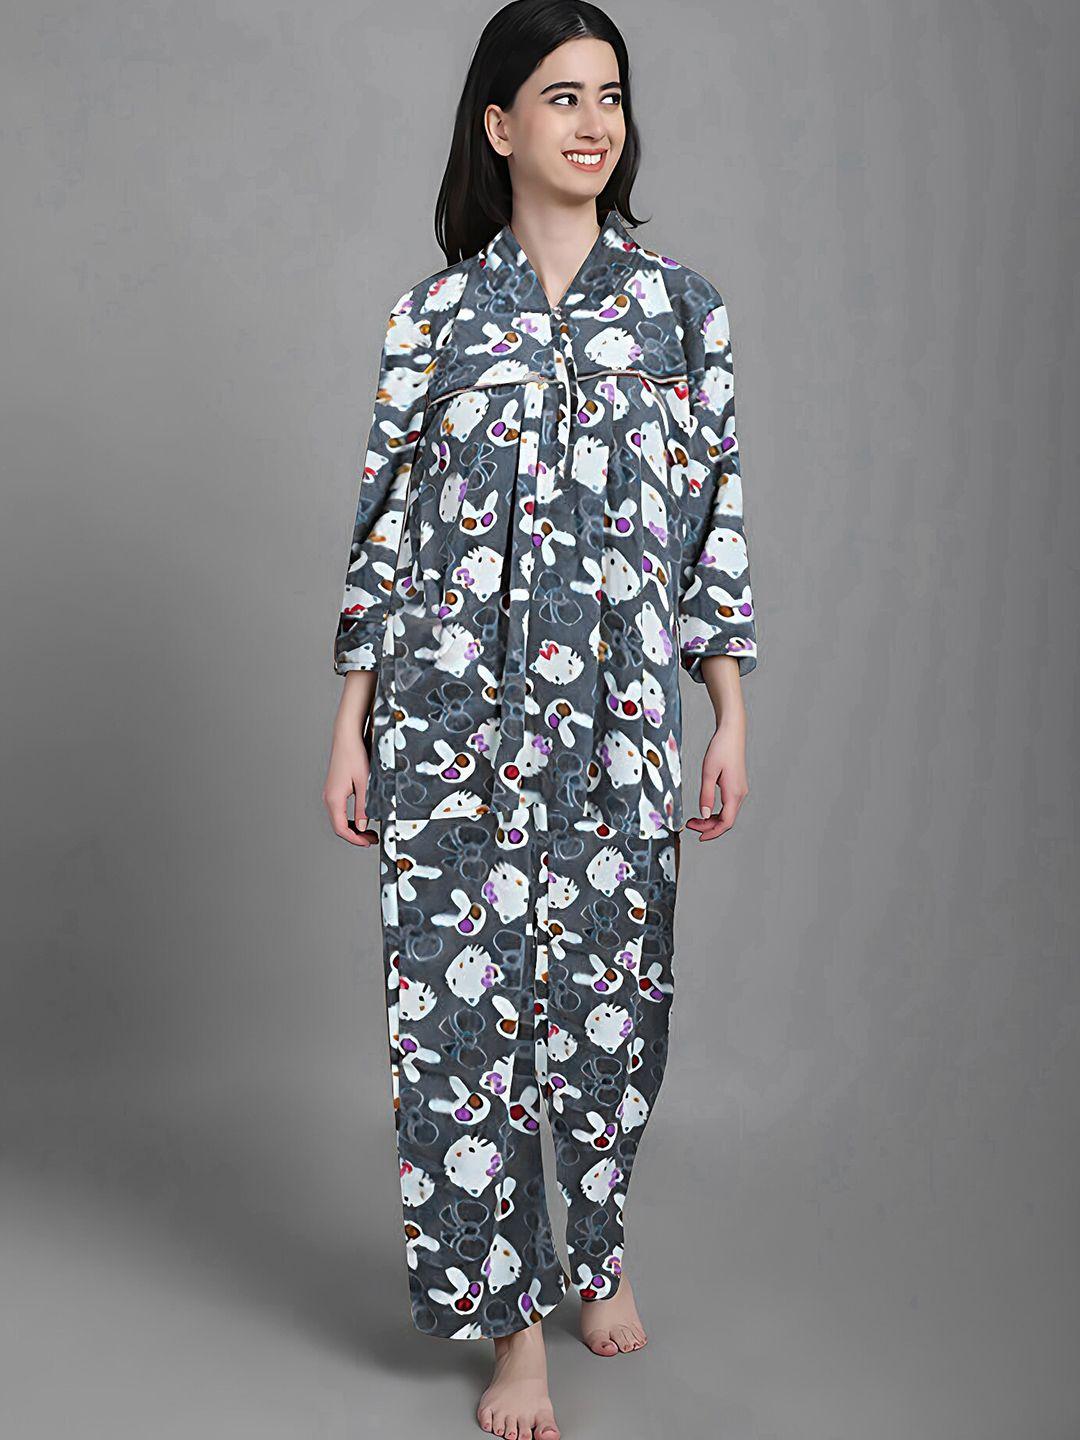 shararat graphic printed v-neck pure wool top with pyjamas